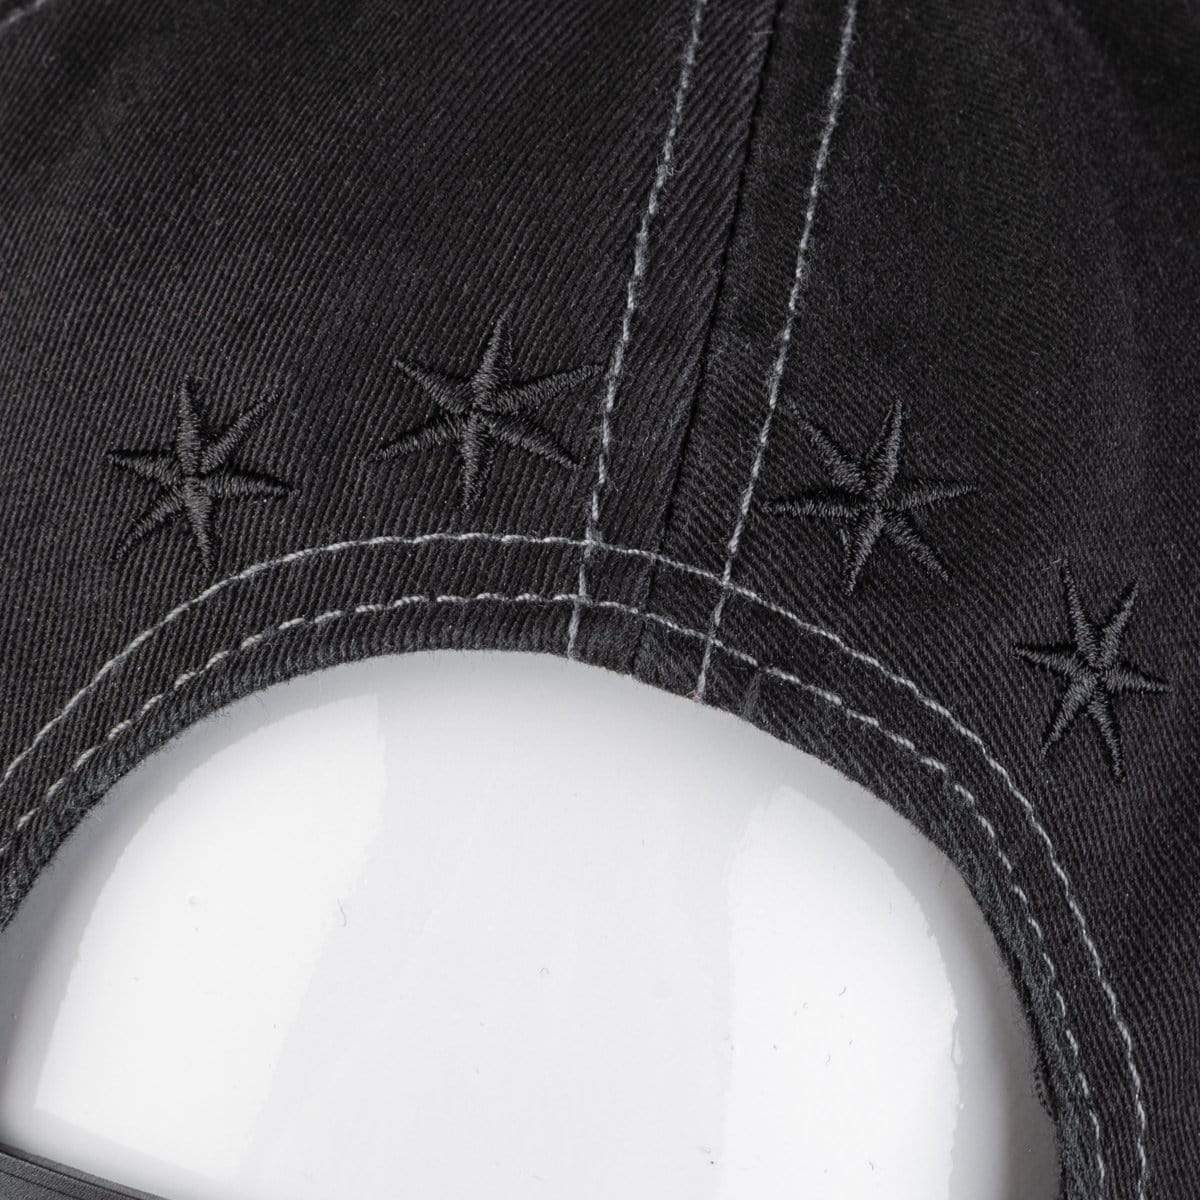 Wornstar Clothing Baseball Hat. Shadow Strike Trucker Hat - Black